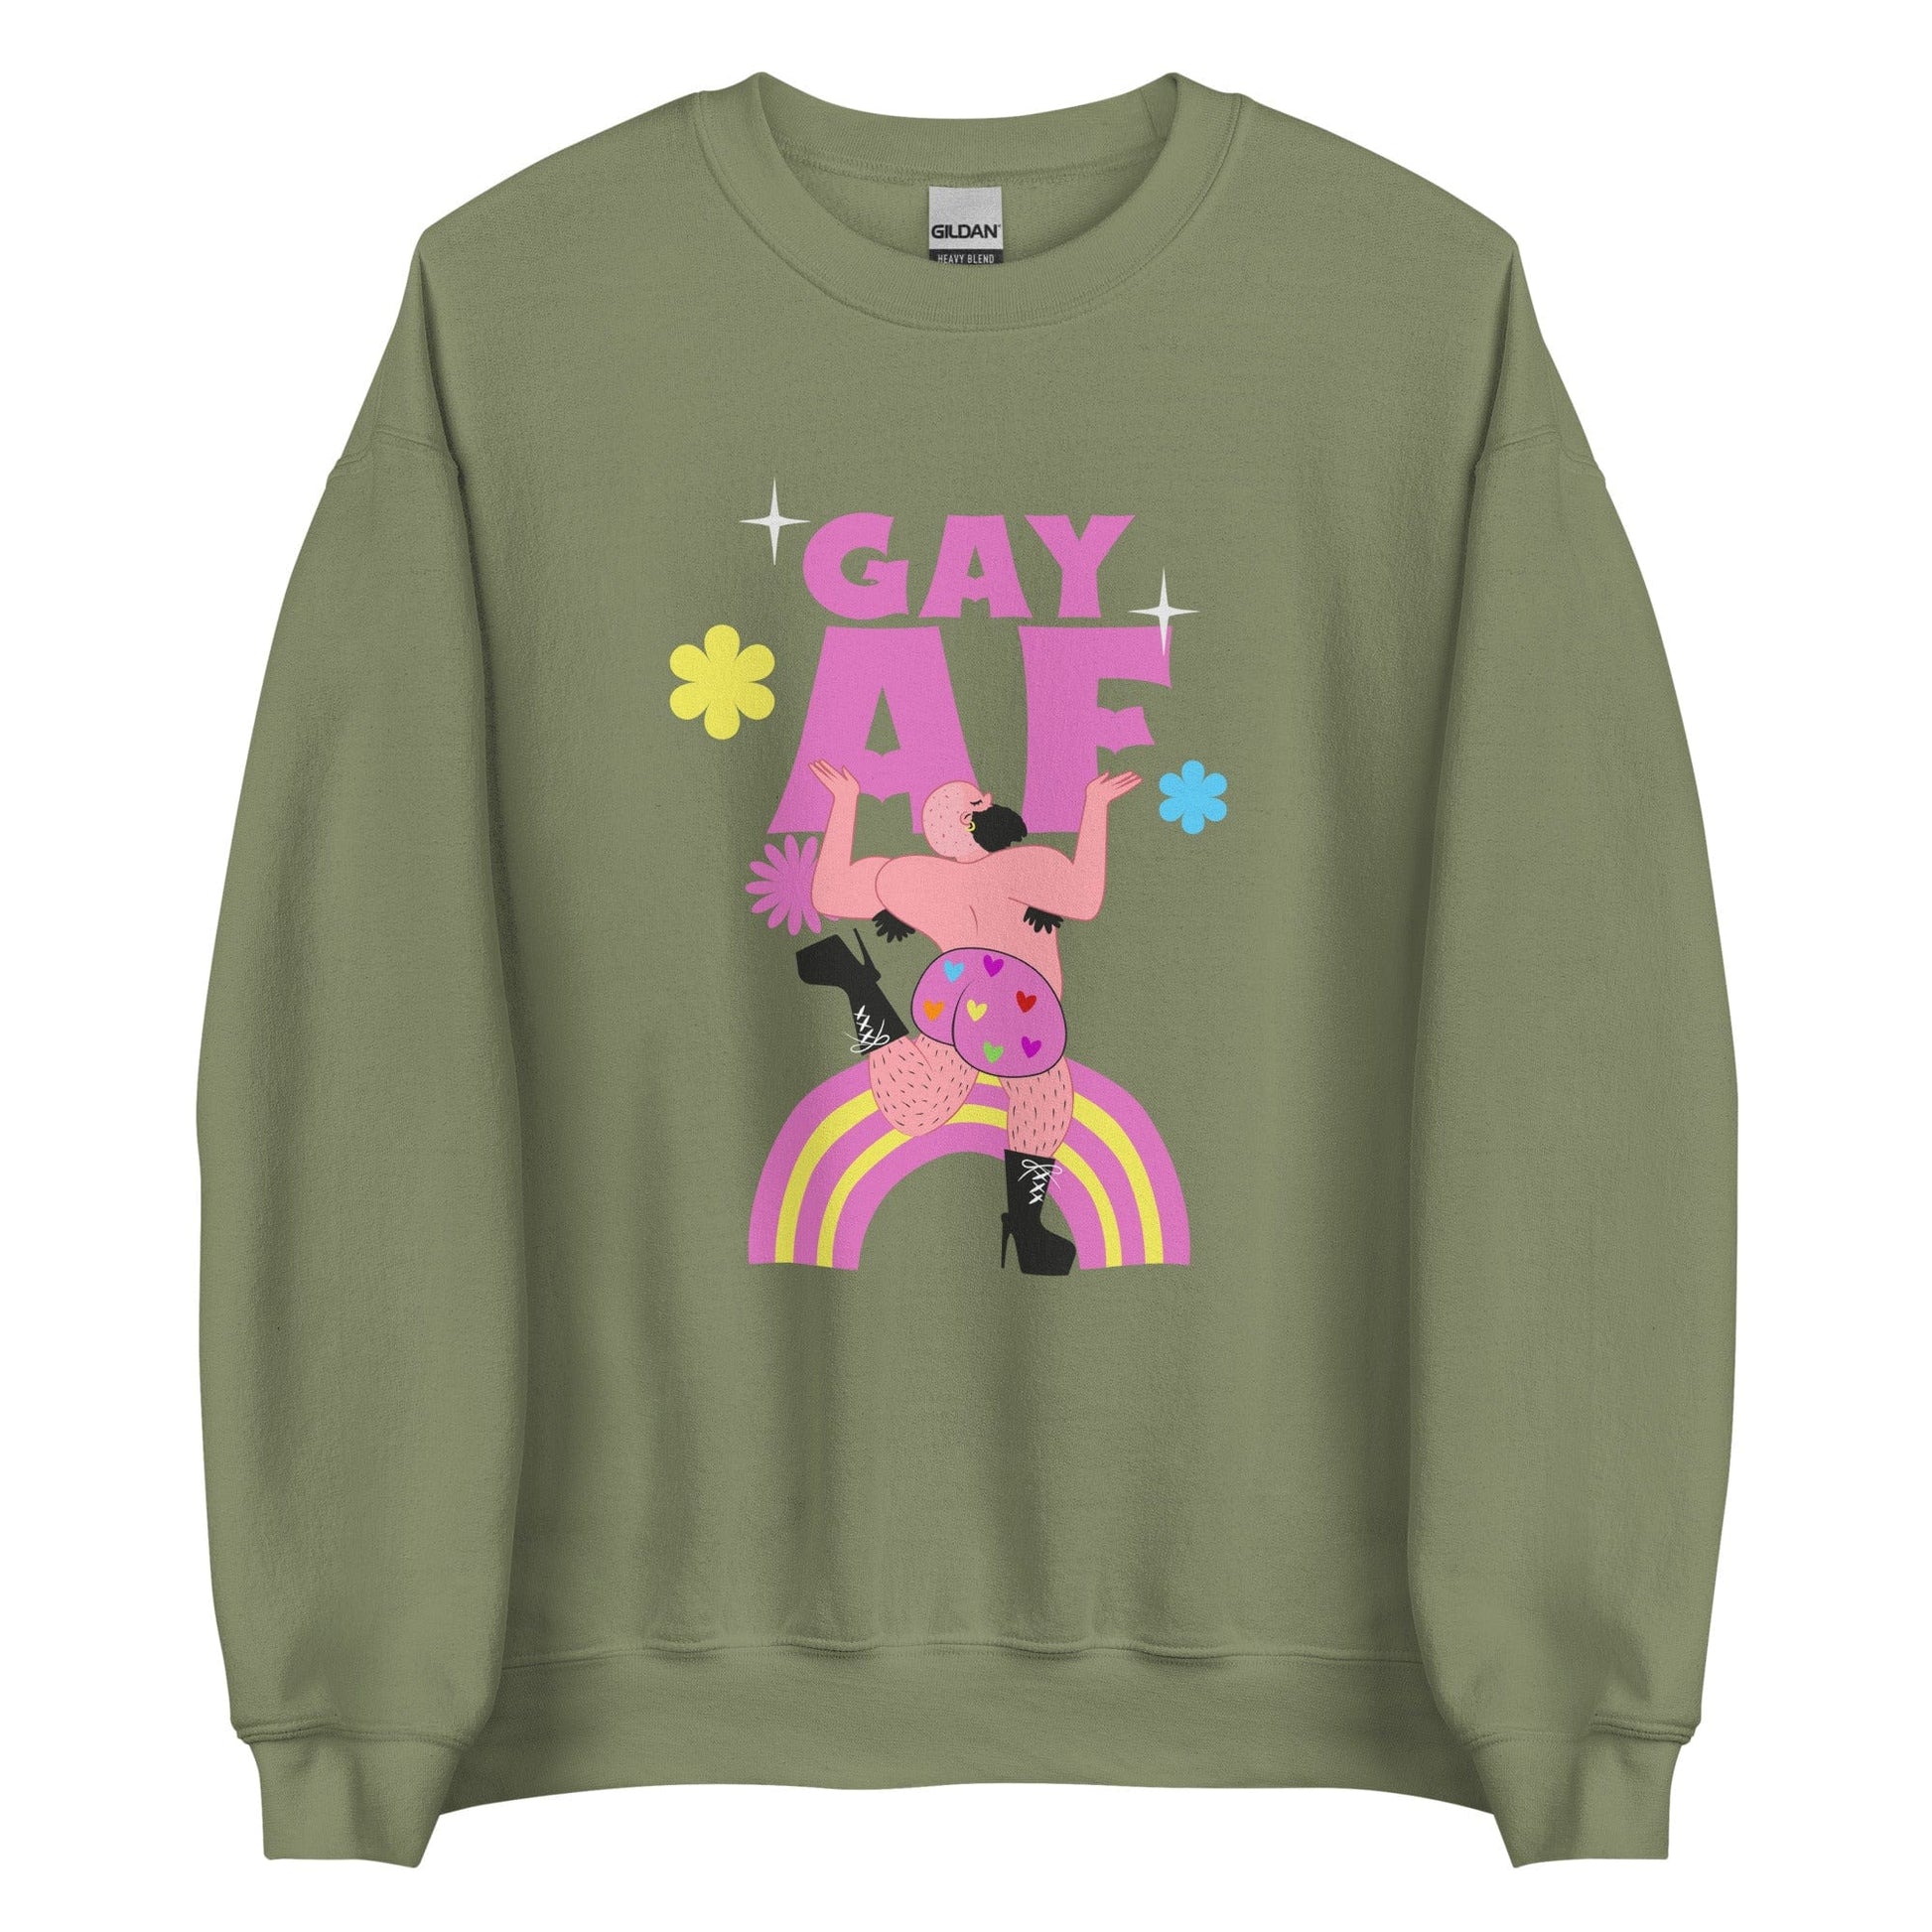 queer-gay-af-military-green-sweatshirt-lgbtq-by-feminist-define